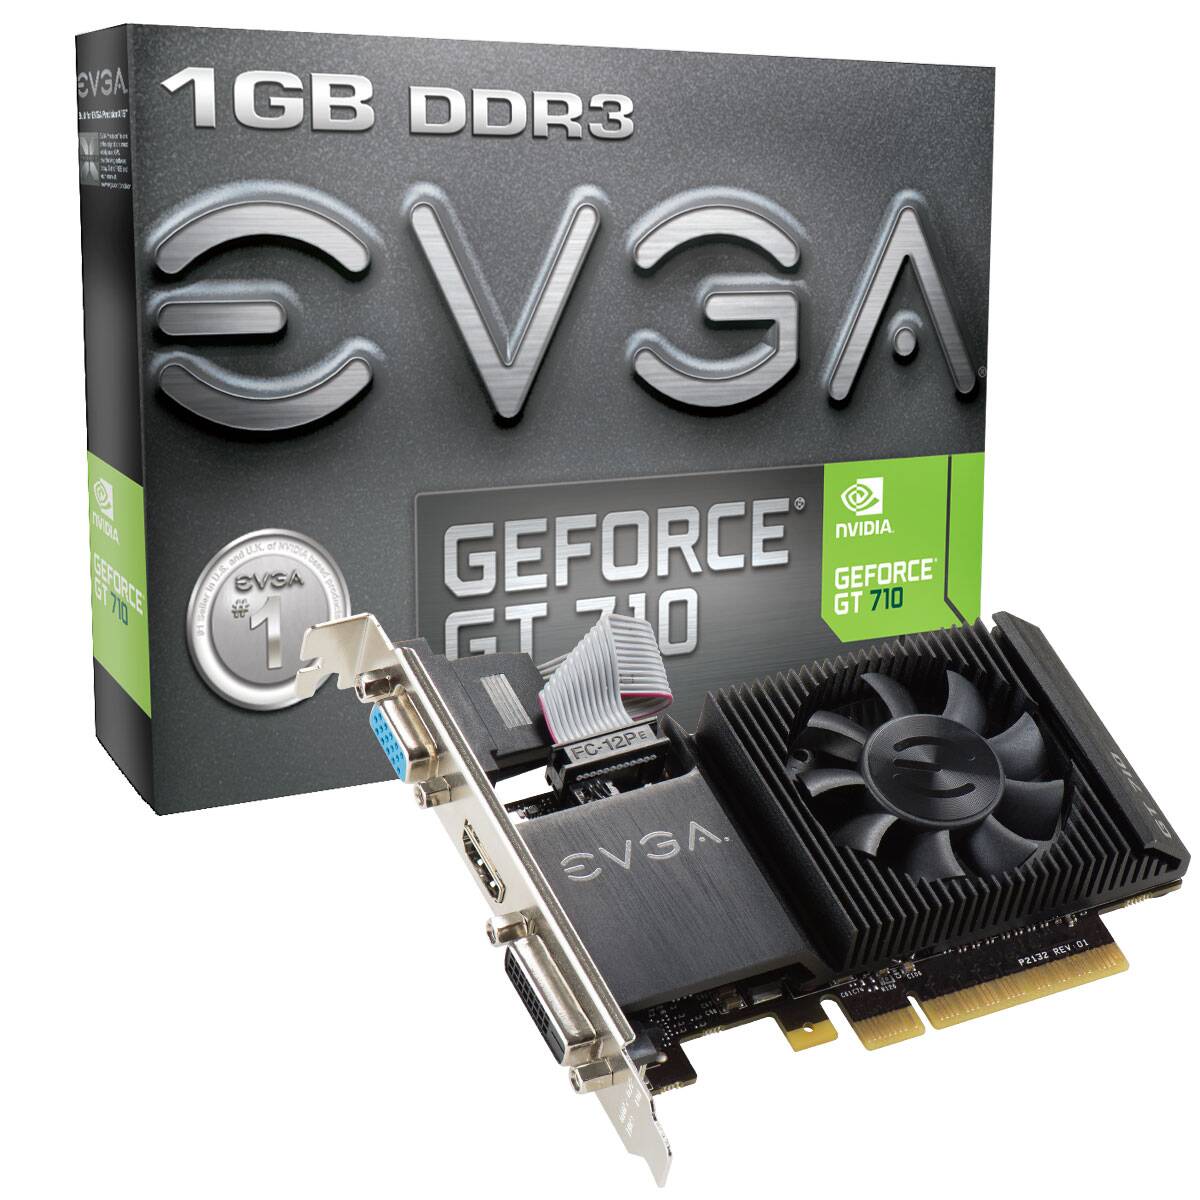 EVGA - Articles - EVGA GeForce GT 710